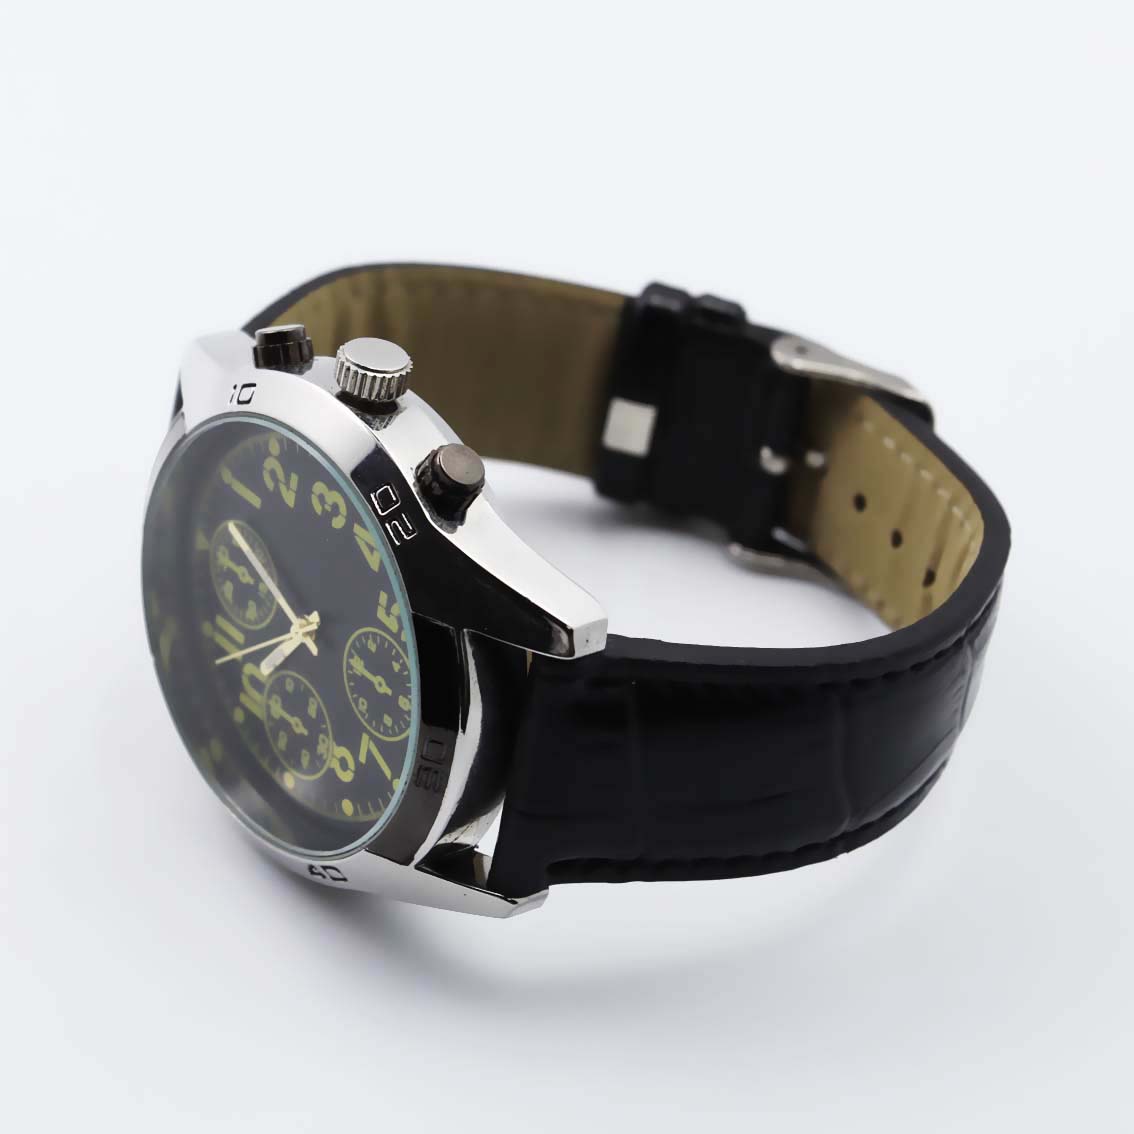 #02010Men's wristwatch quartz analog leather strap watch